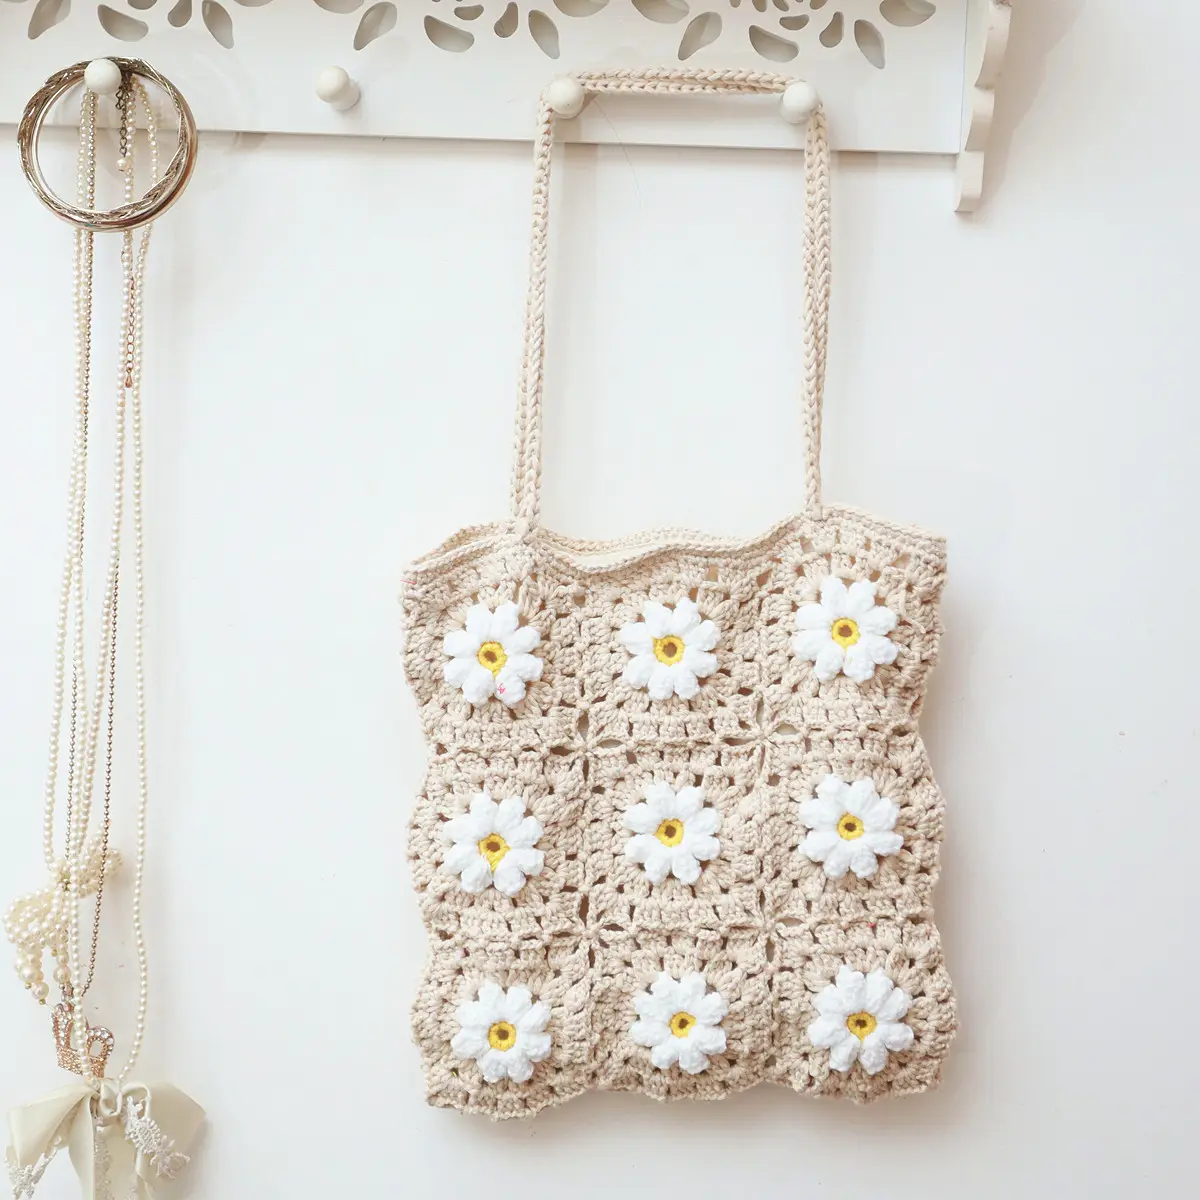 Fancy Hot Style Handmade Floral Knitting Crochet Yarn Net White Daisy Flower Pattern Tote Handbag Shoulder Beach Bag